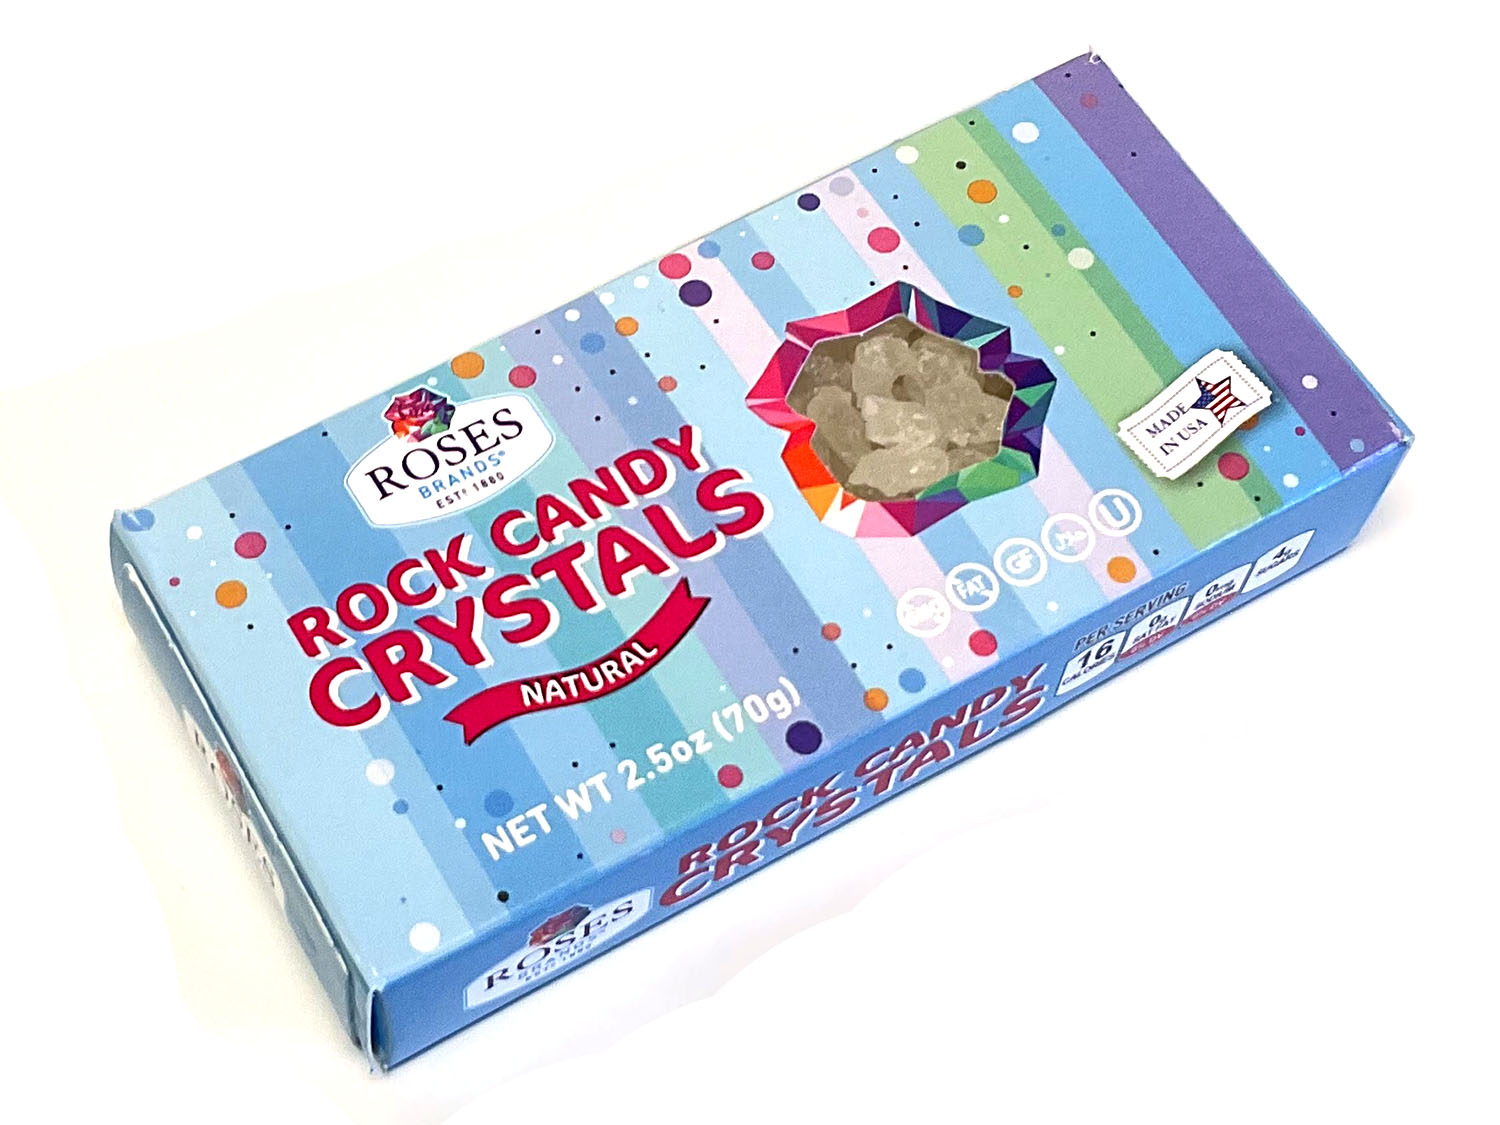 Rock Candy Crystals - 2.5 oz box